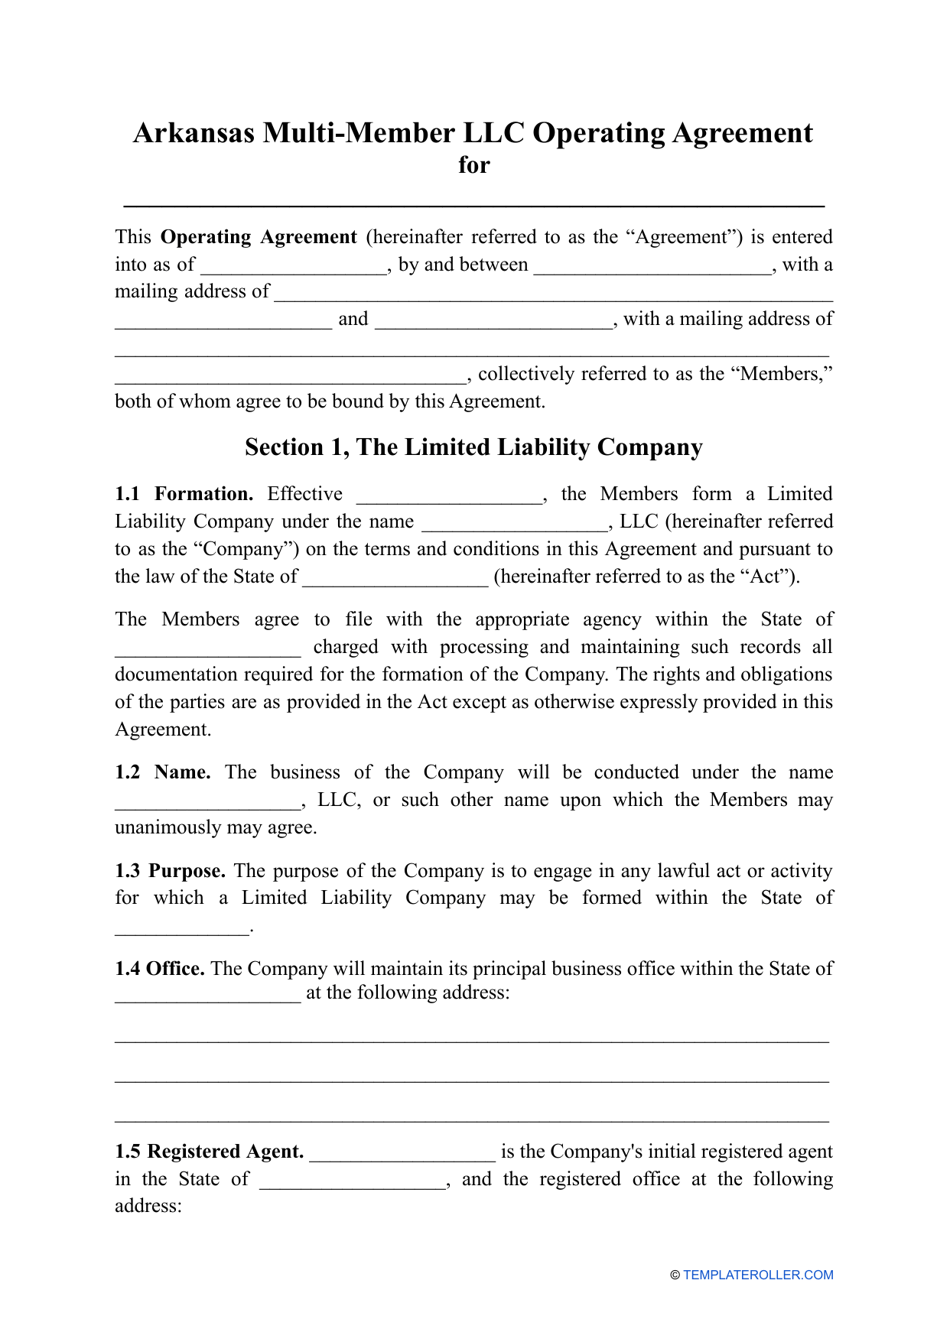 Multi-Member LLC Operating Agreement Template - Arkansas, Page 1